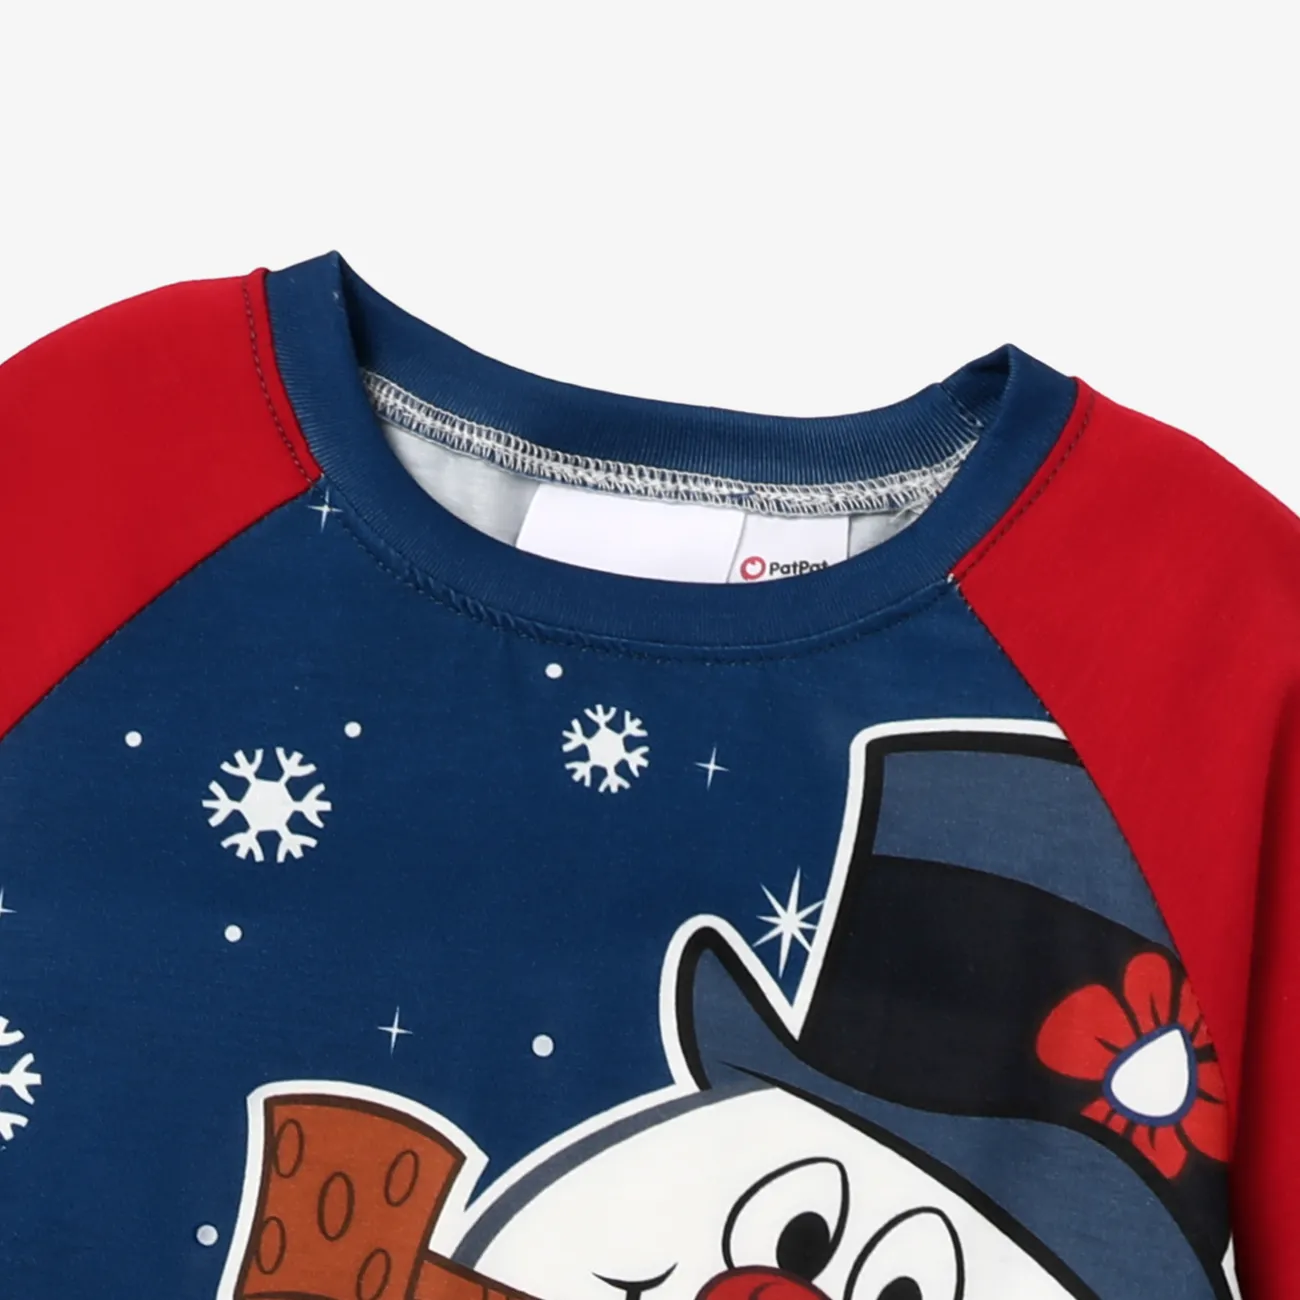 Frosty The Snowman Navidad Looks familiares Manga larga Conjuntos combinados para familia Pijamas (Flame Resistant) Multicolor big image 1